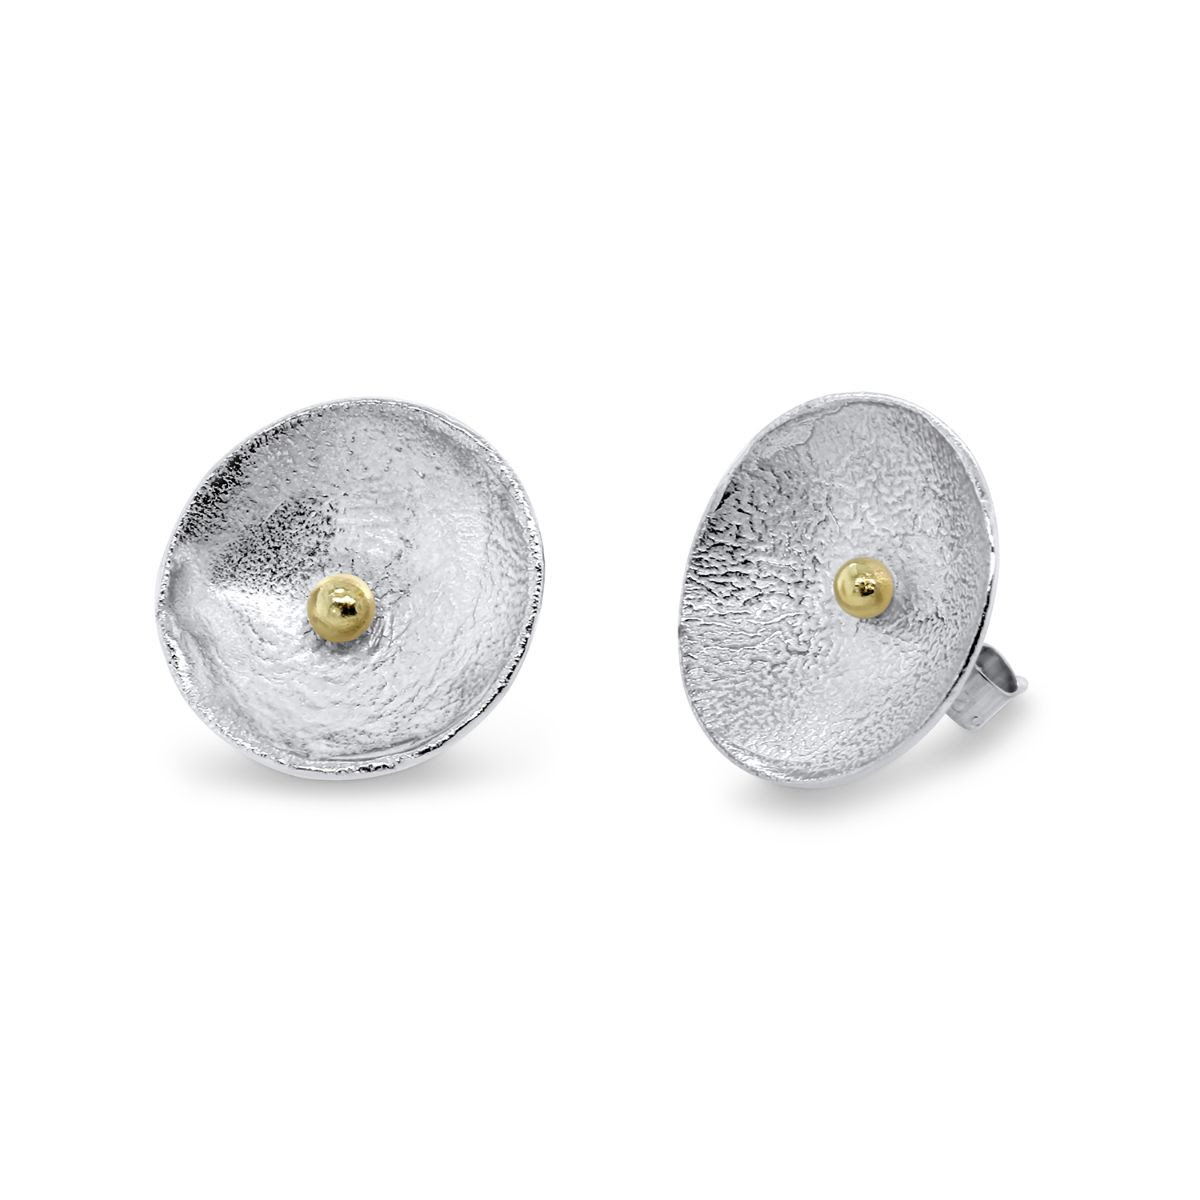 Daisy stud earrings with gold granulation by shimara carlow at designyard contemporary jewellery dublin ireland